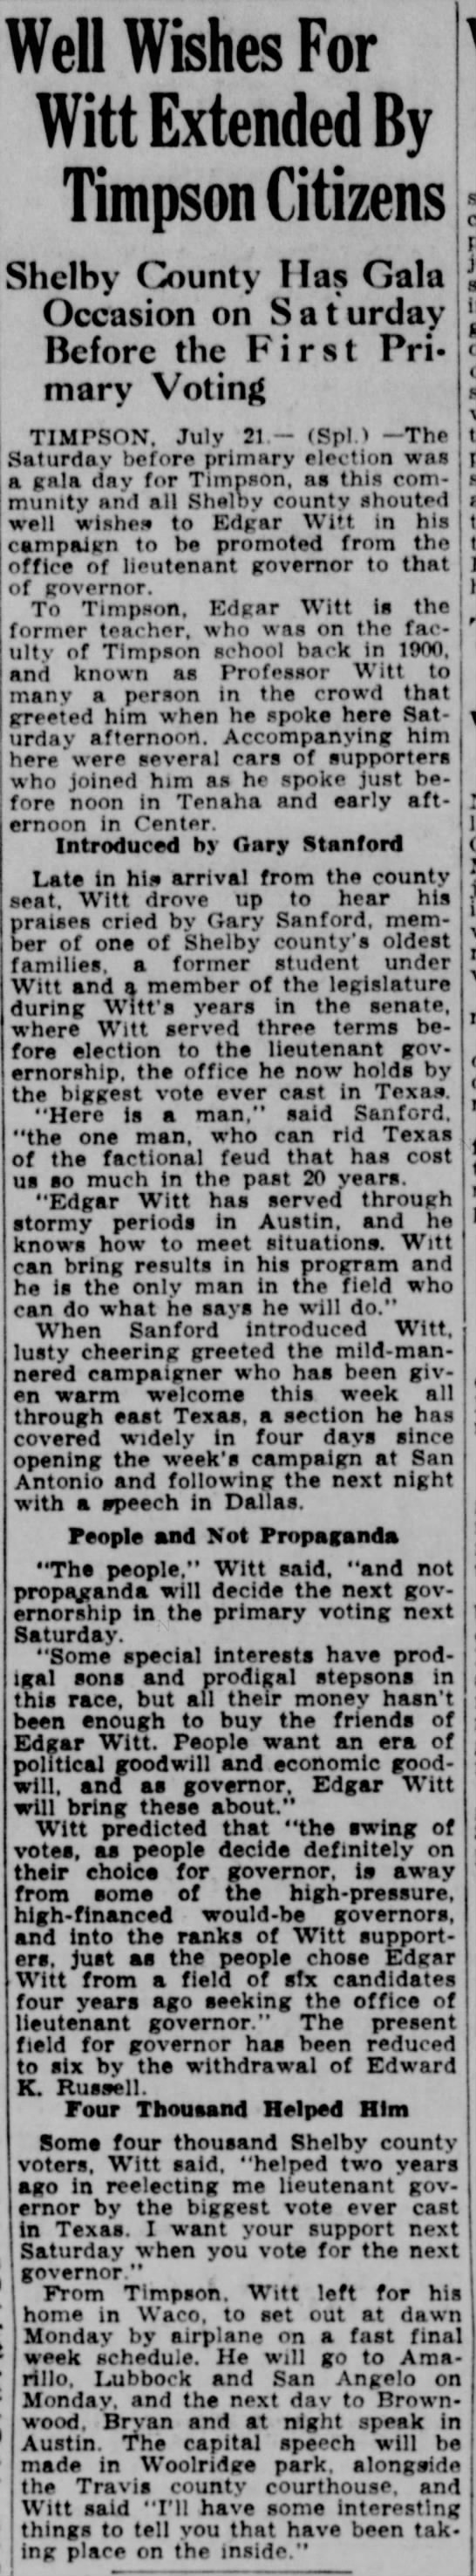 


Waco Tribune-Herald
July 22, 1934